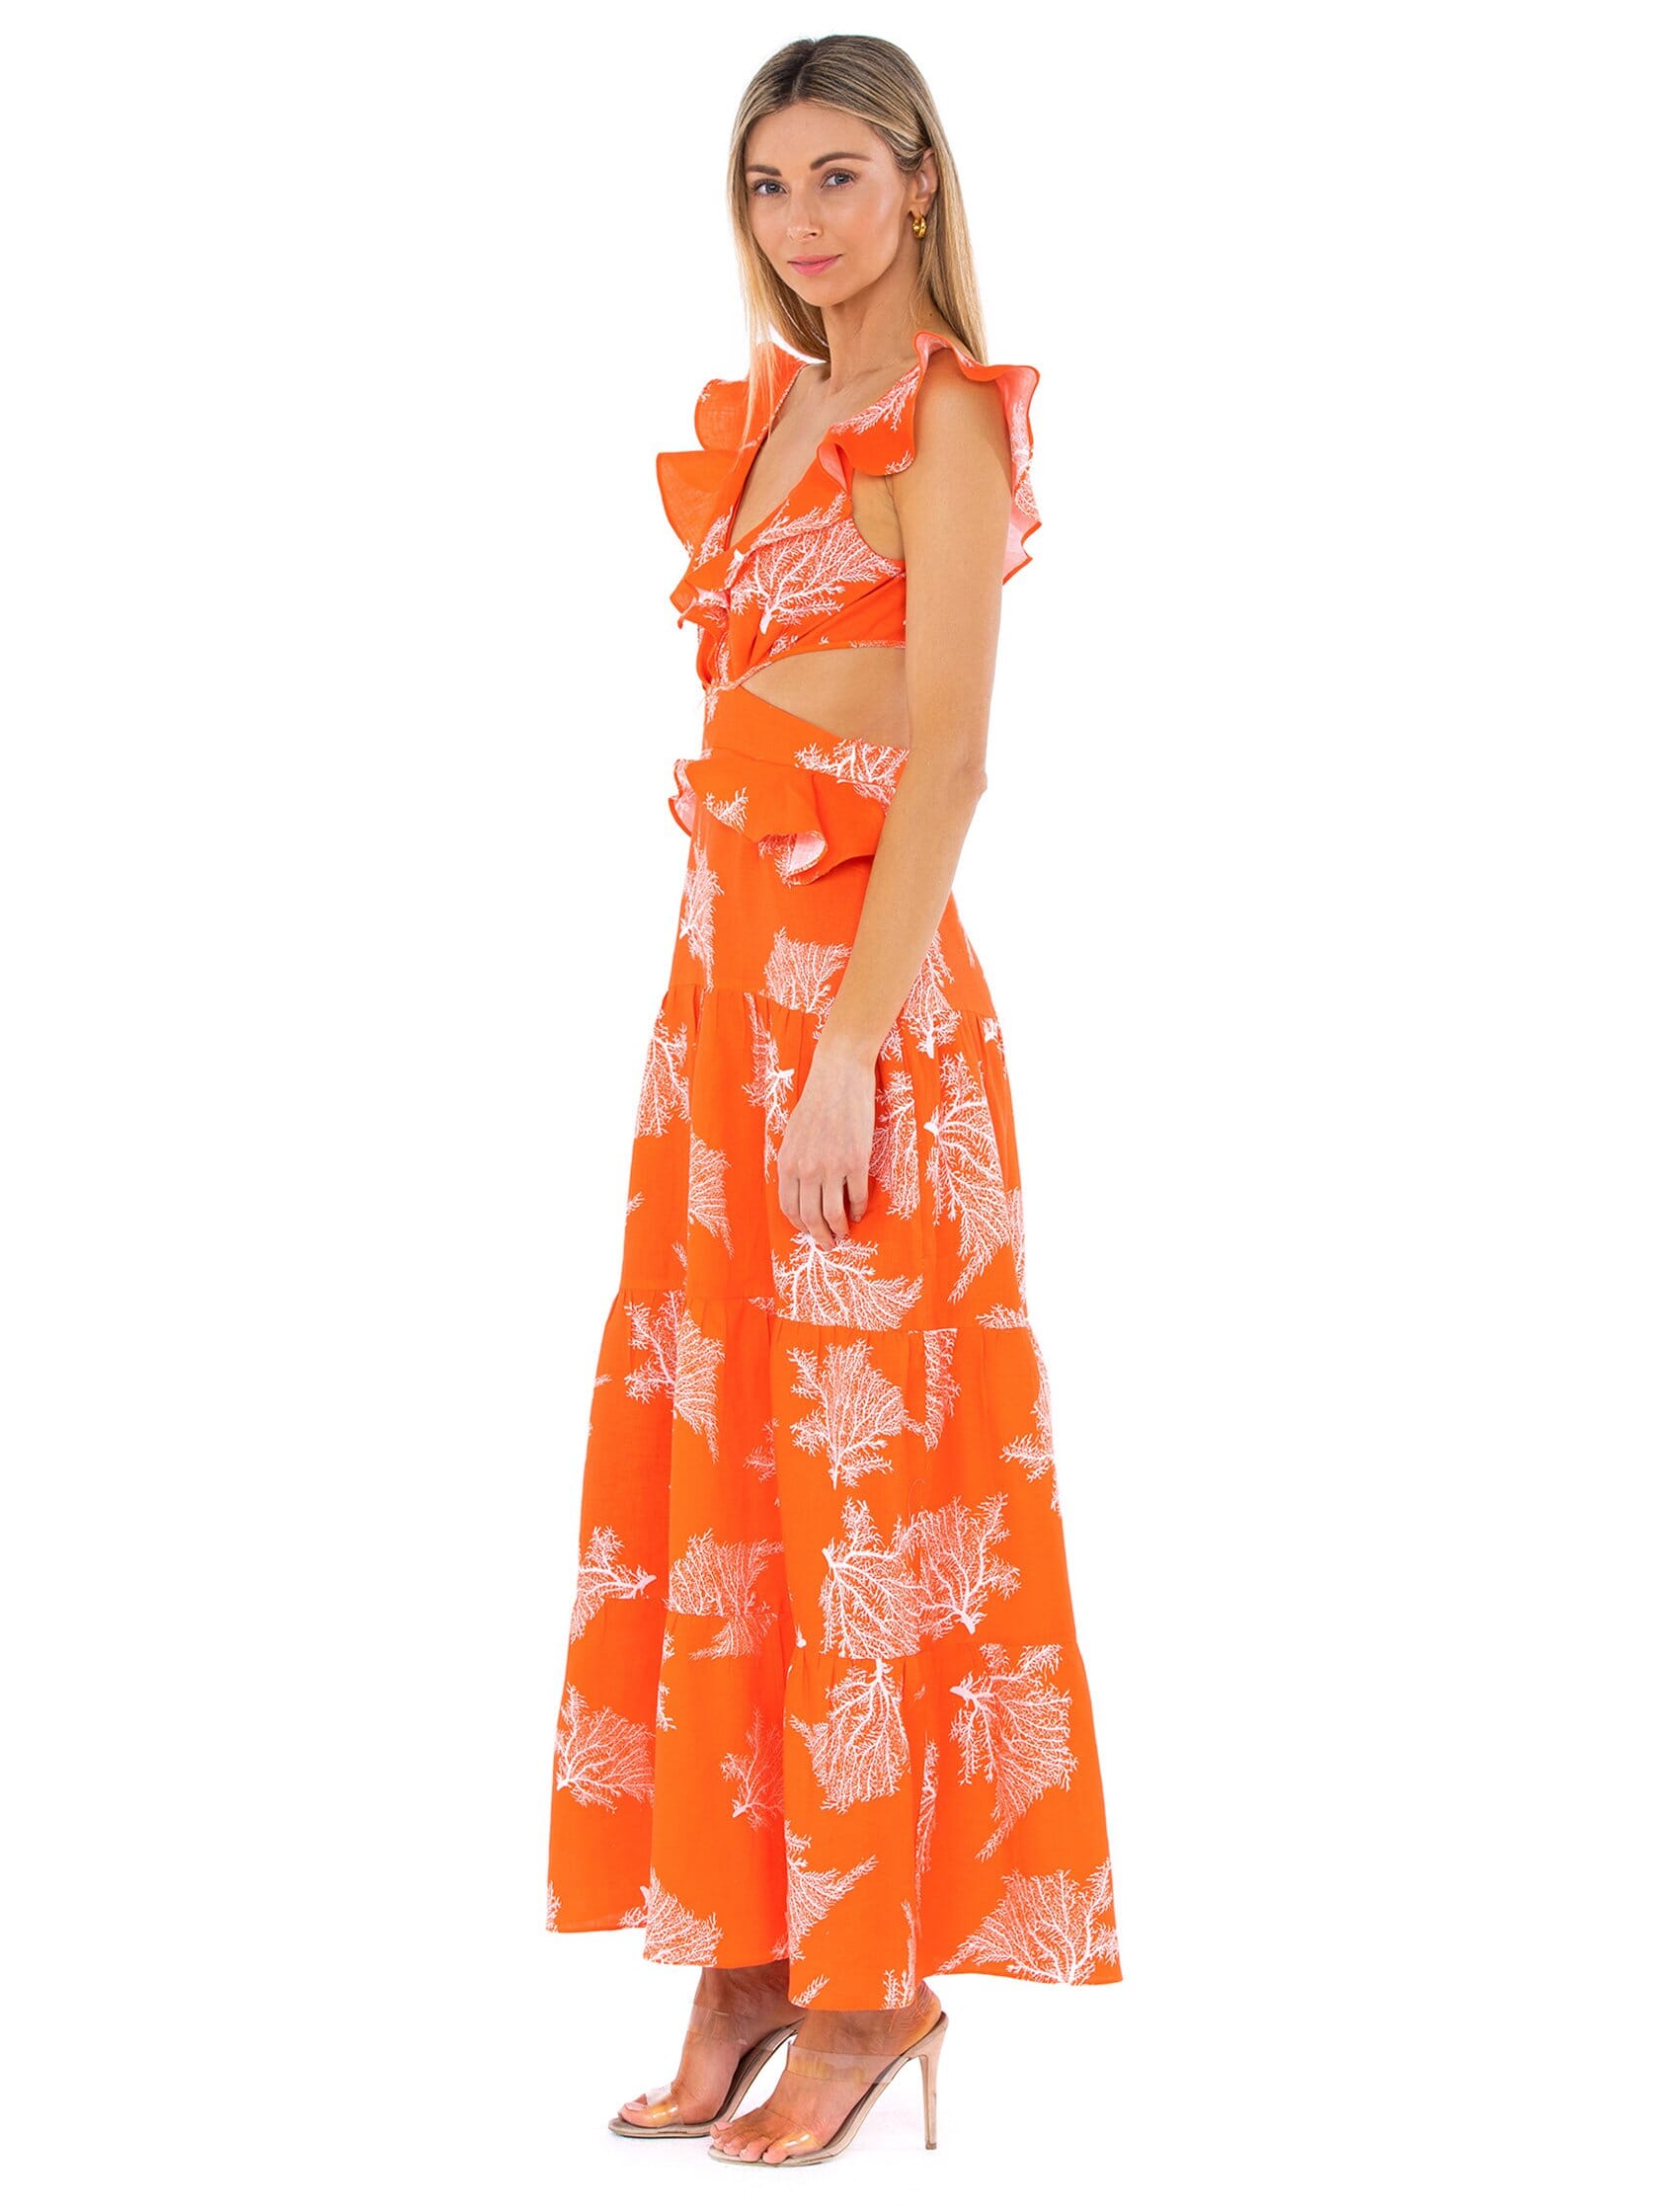 BB Dakota, Out Late Dress in Tangerine